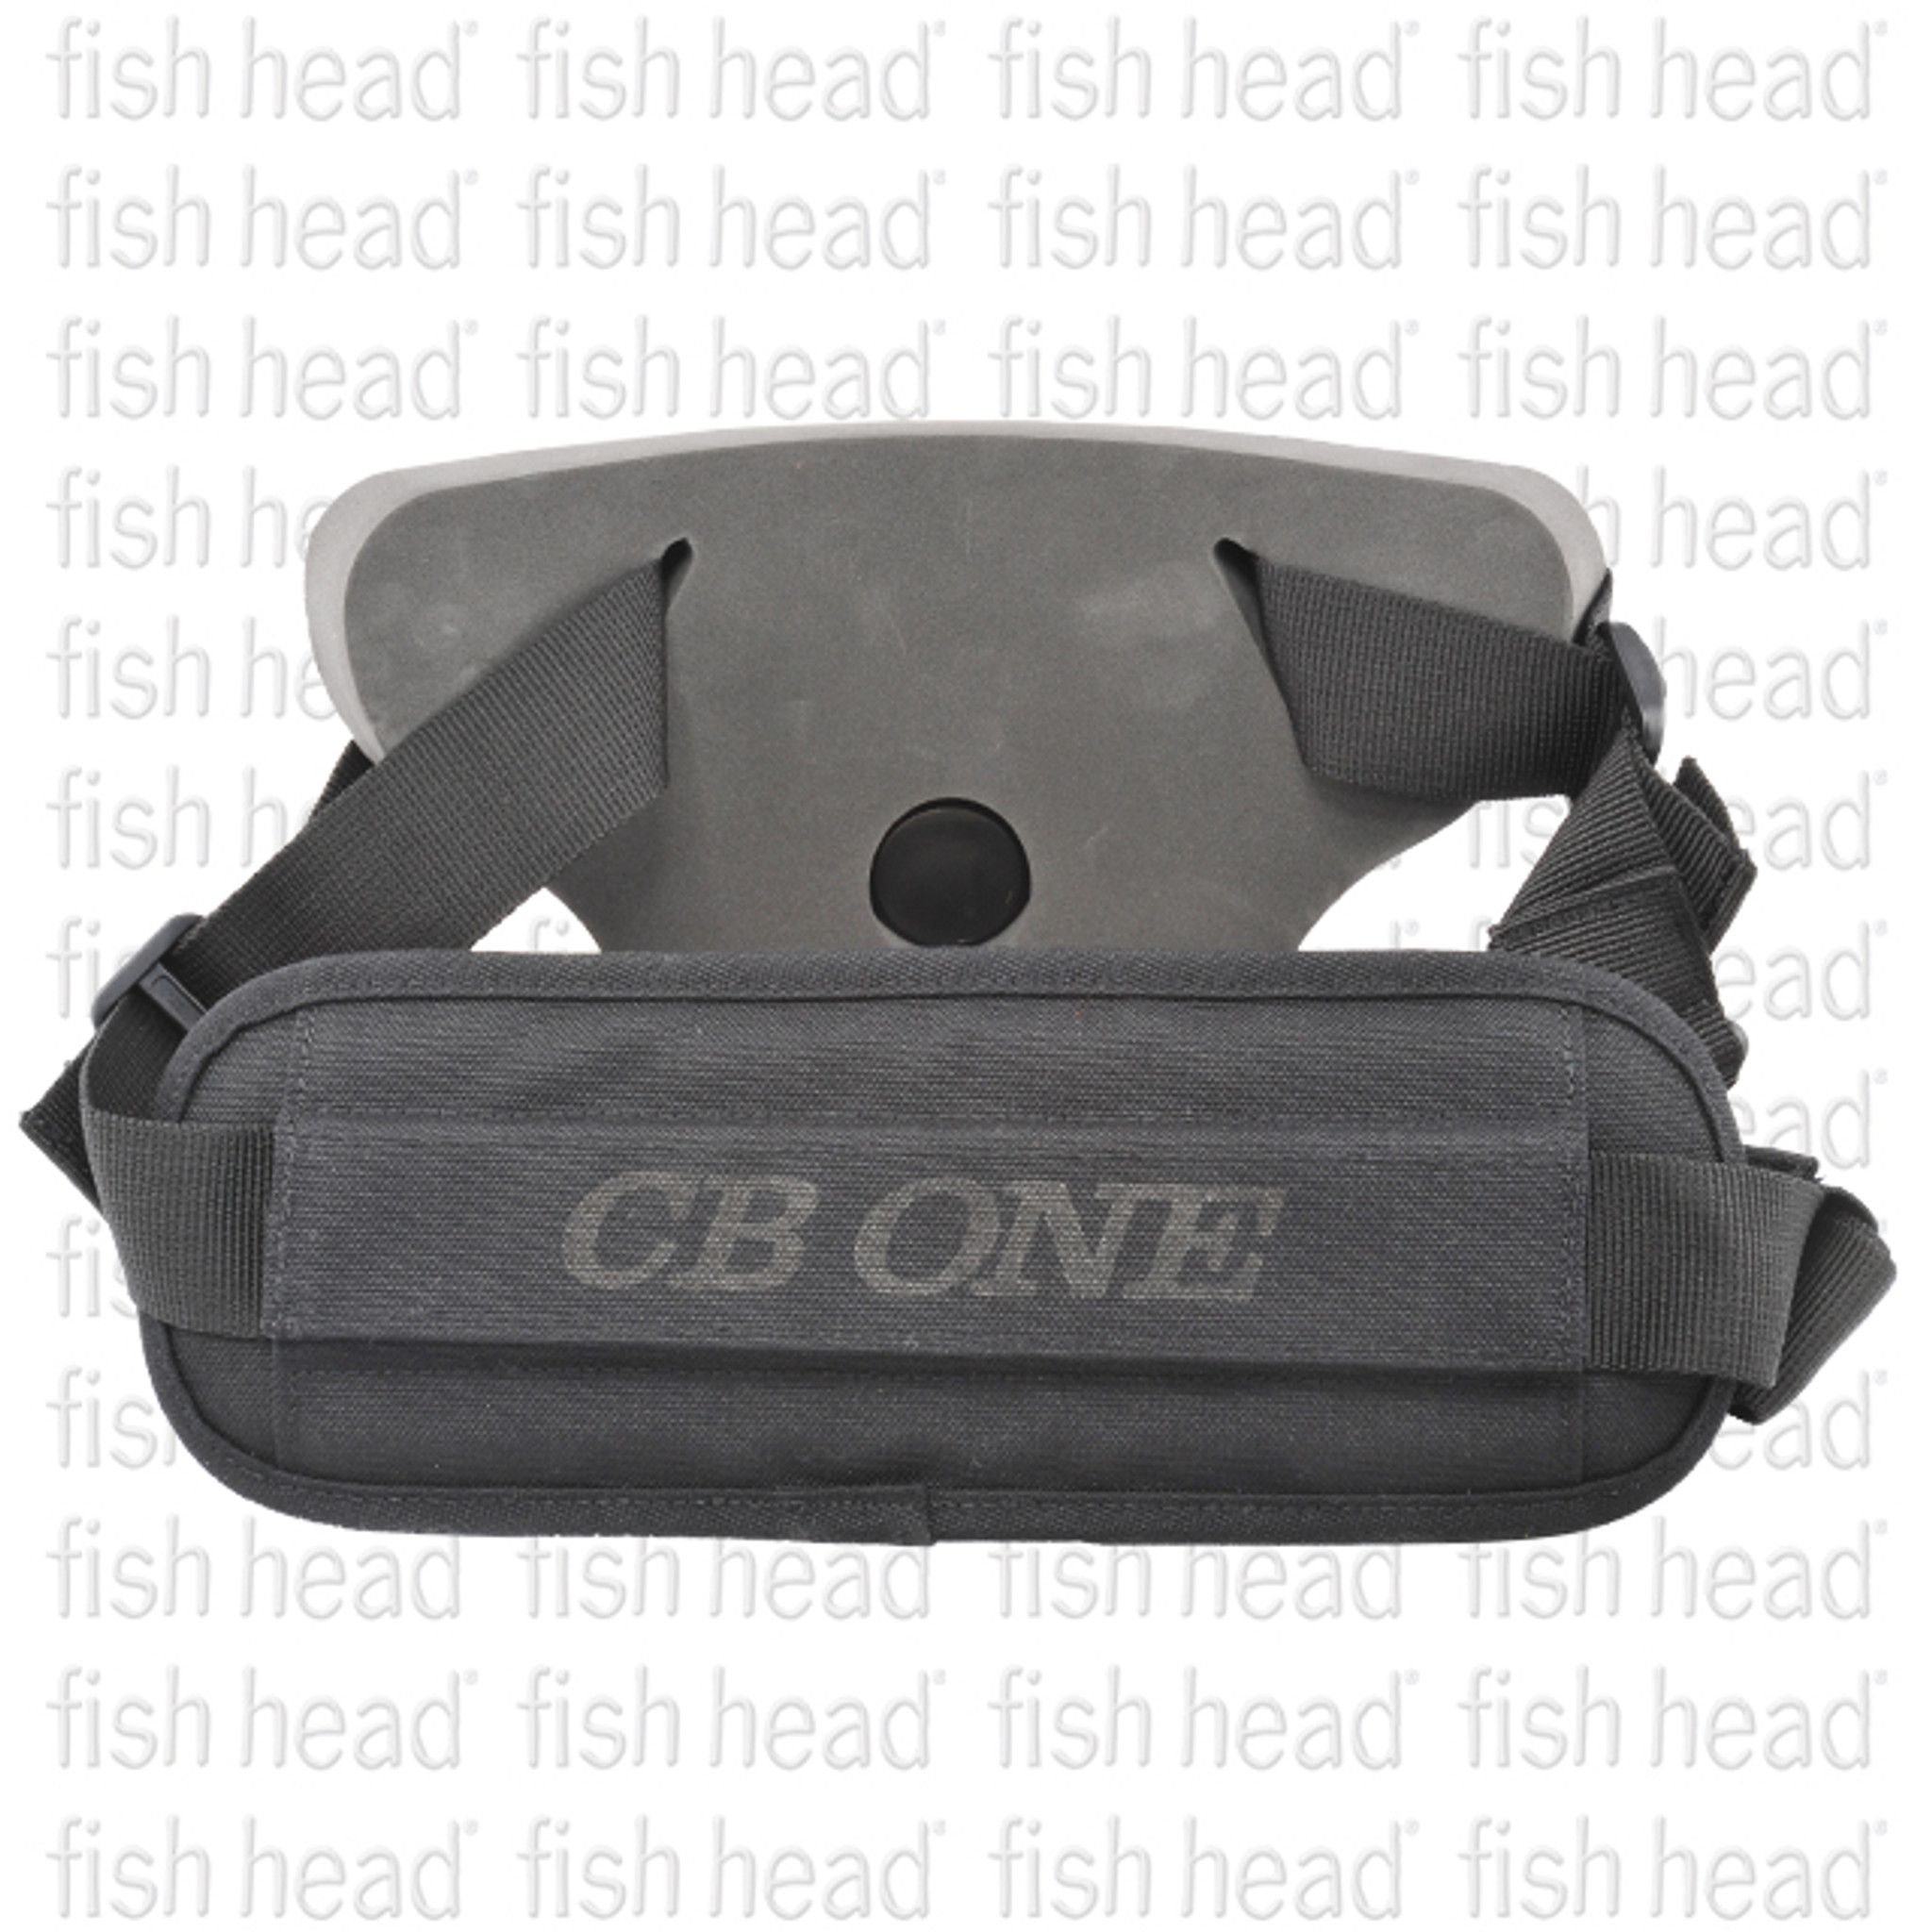 CB One Fighting Belt - Fish Head